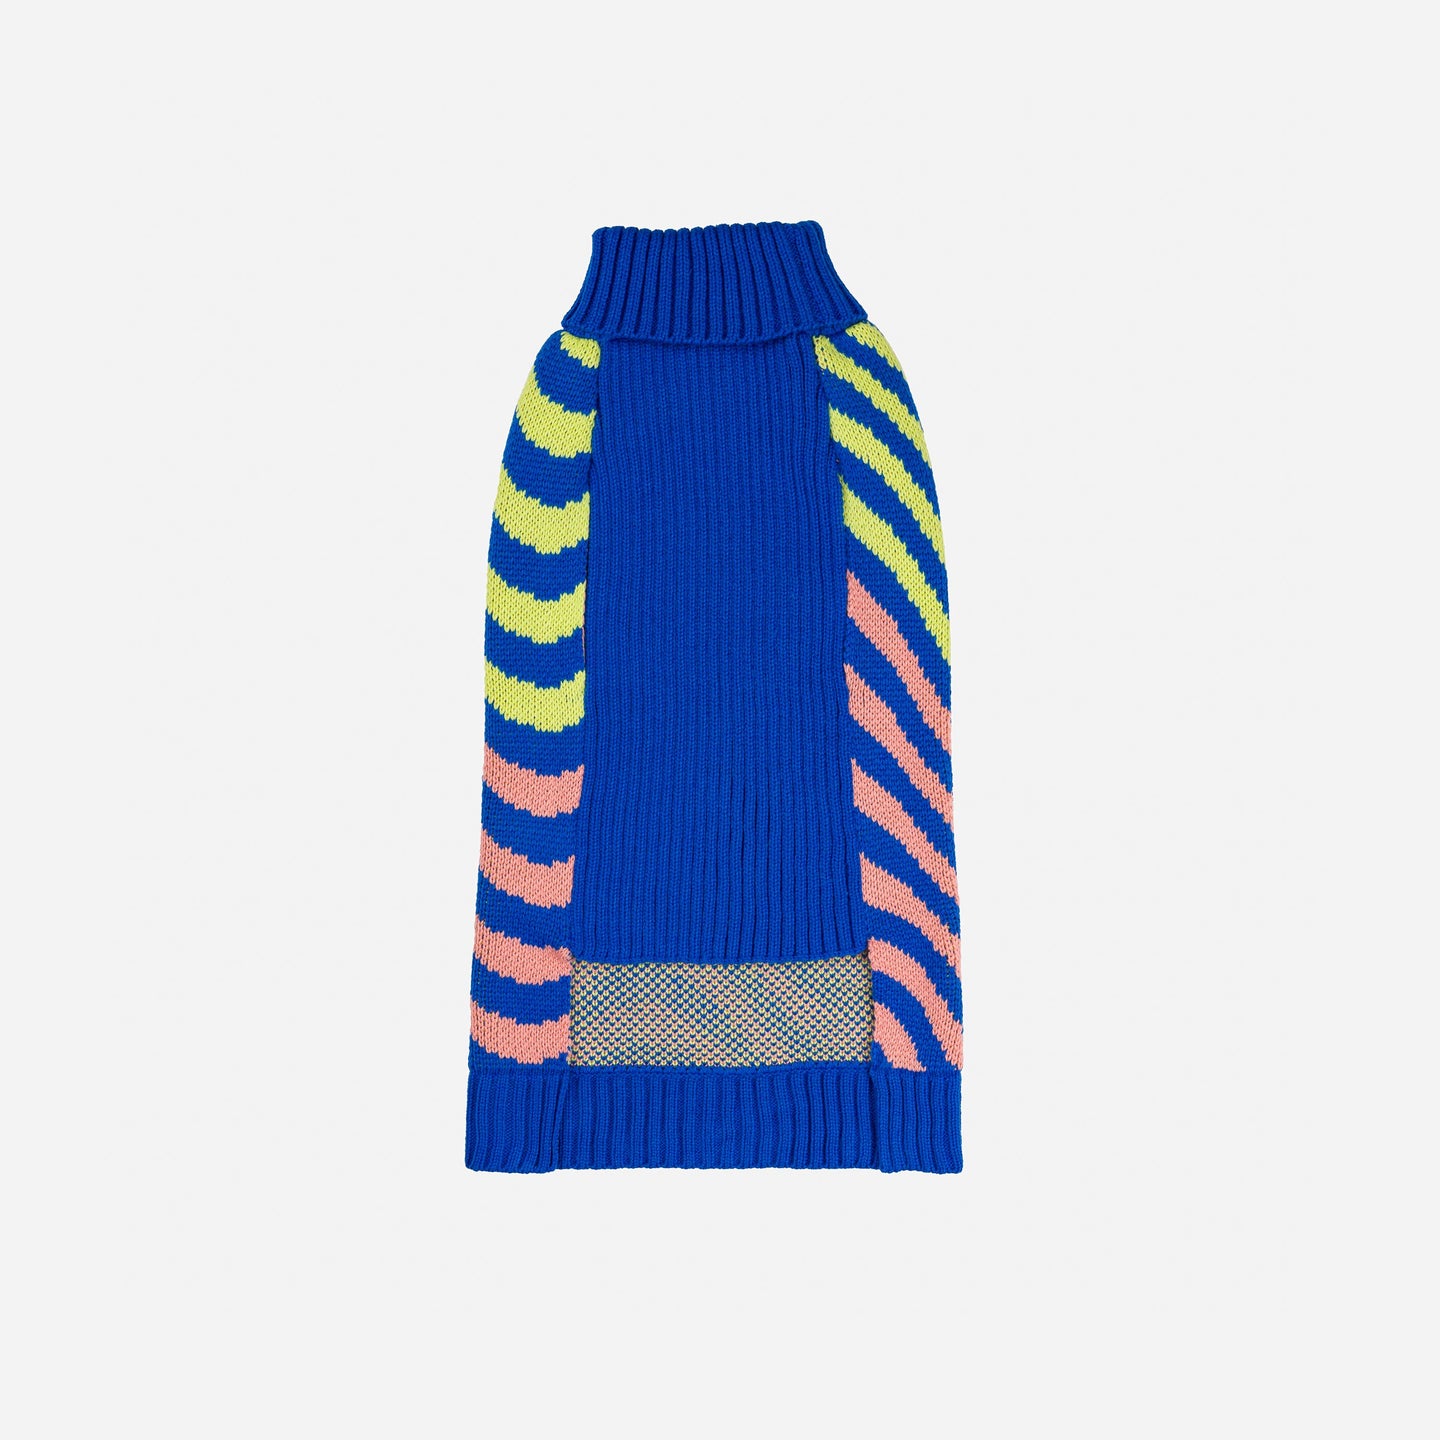 Sound Wave Dog Knit Sweater